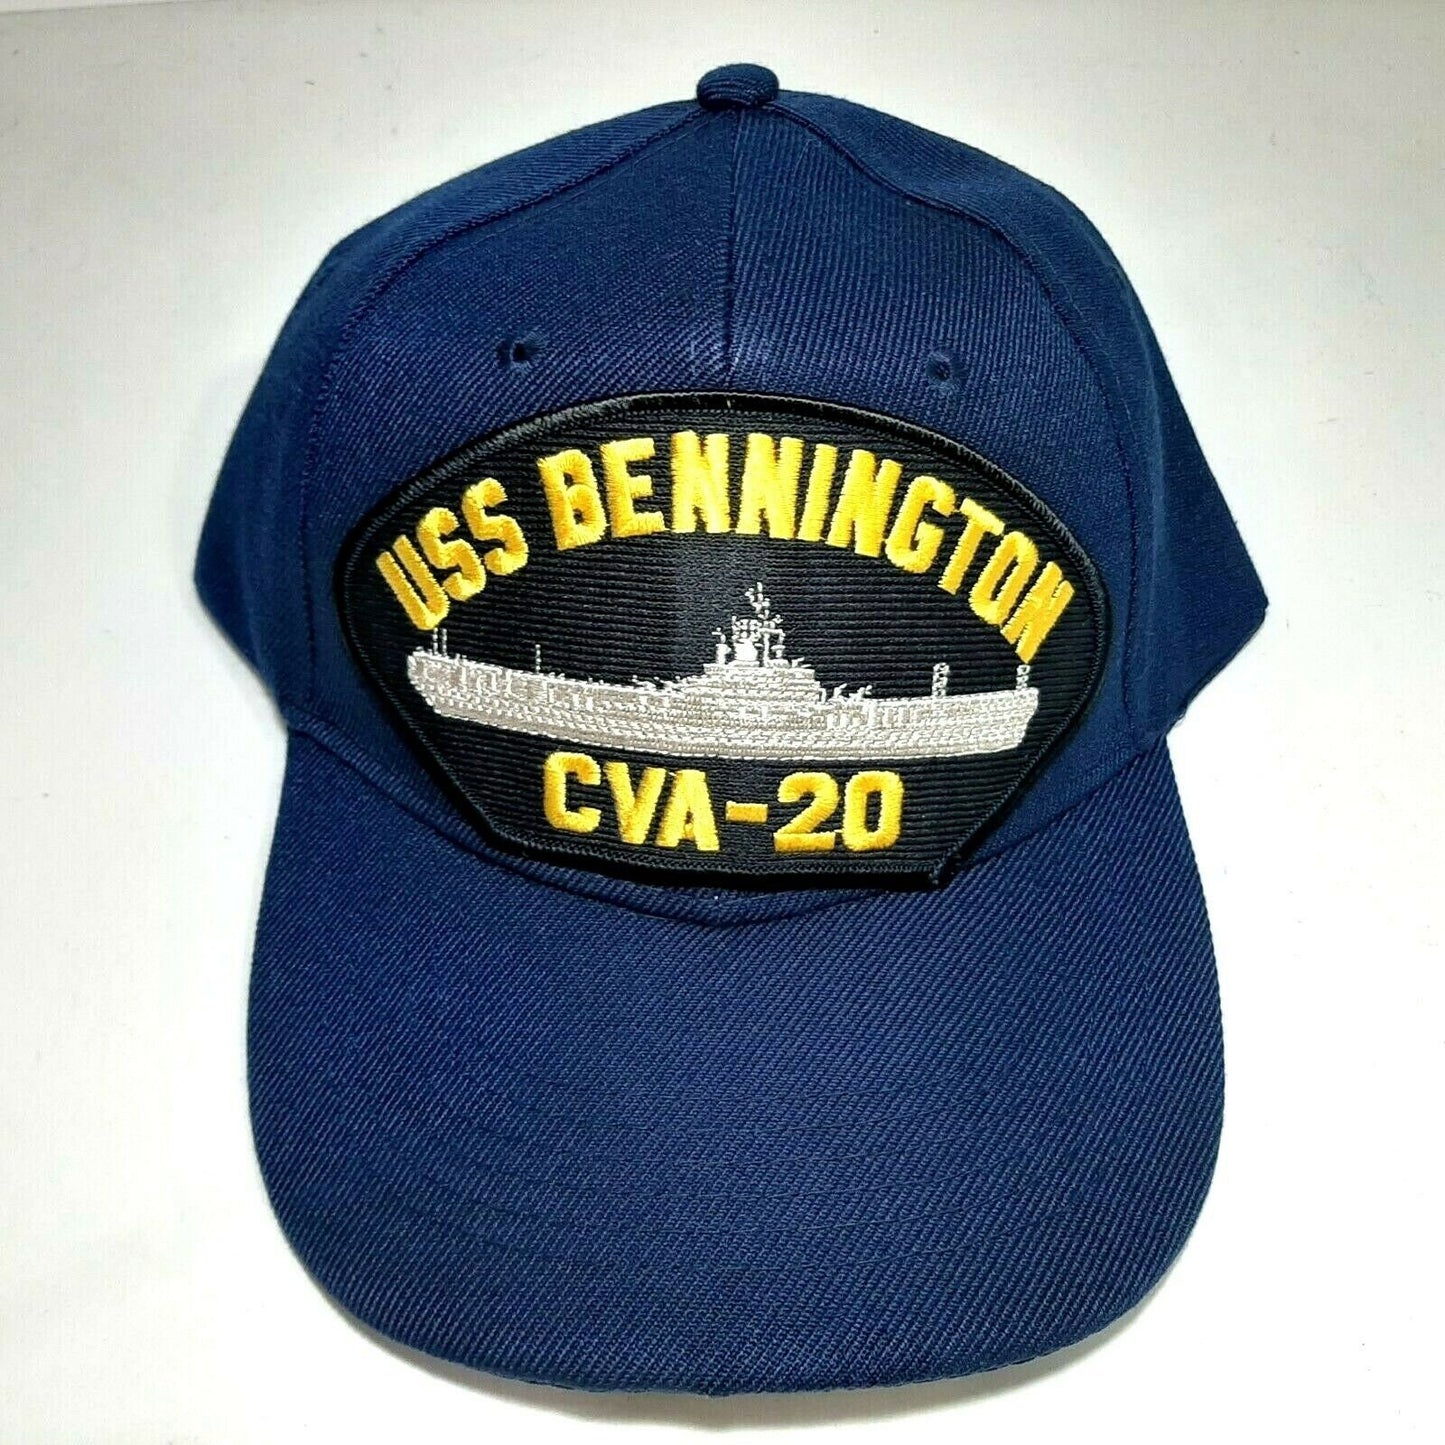 U.S. Navy USS Bennington CVA-20 Men's Patch Cap Hat Navy Blue Acrylic